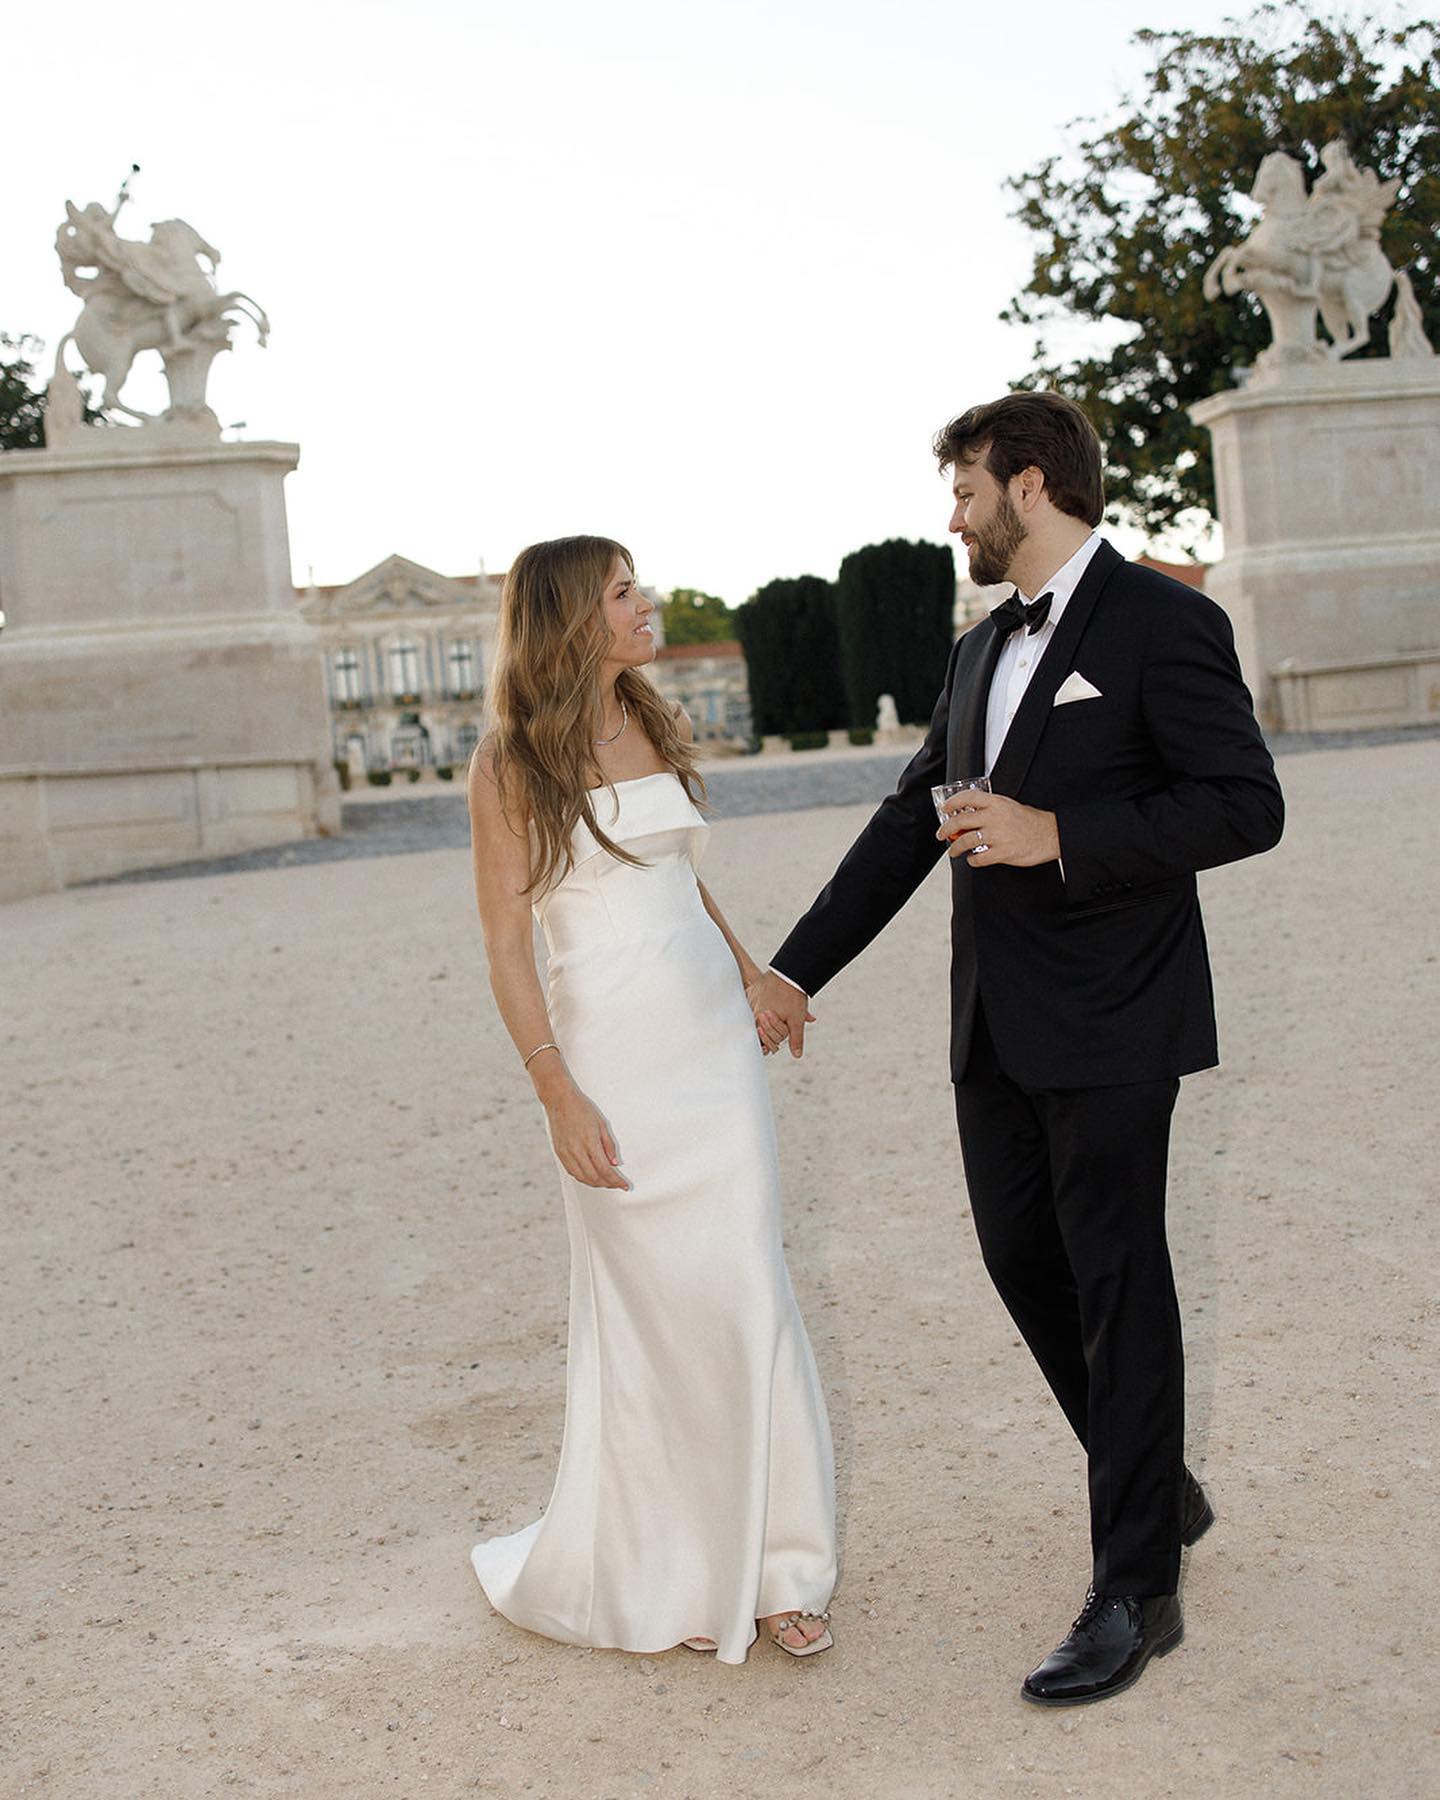 Wedding Day / Perfect Day. A Lisbon wedding in a palace. A dream 🤍 With:

Wedding Planner - @somethingnew_weddingsportug